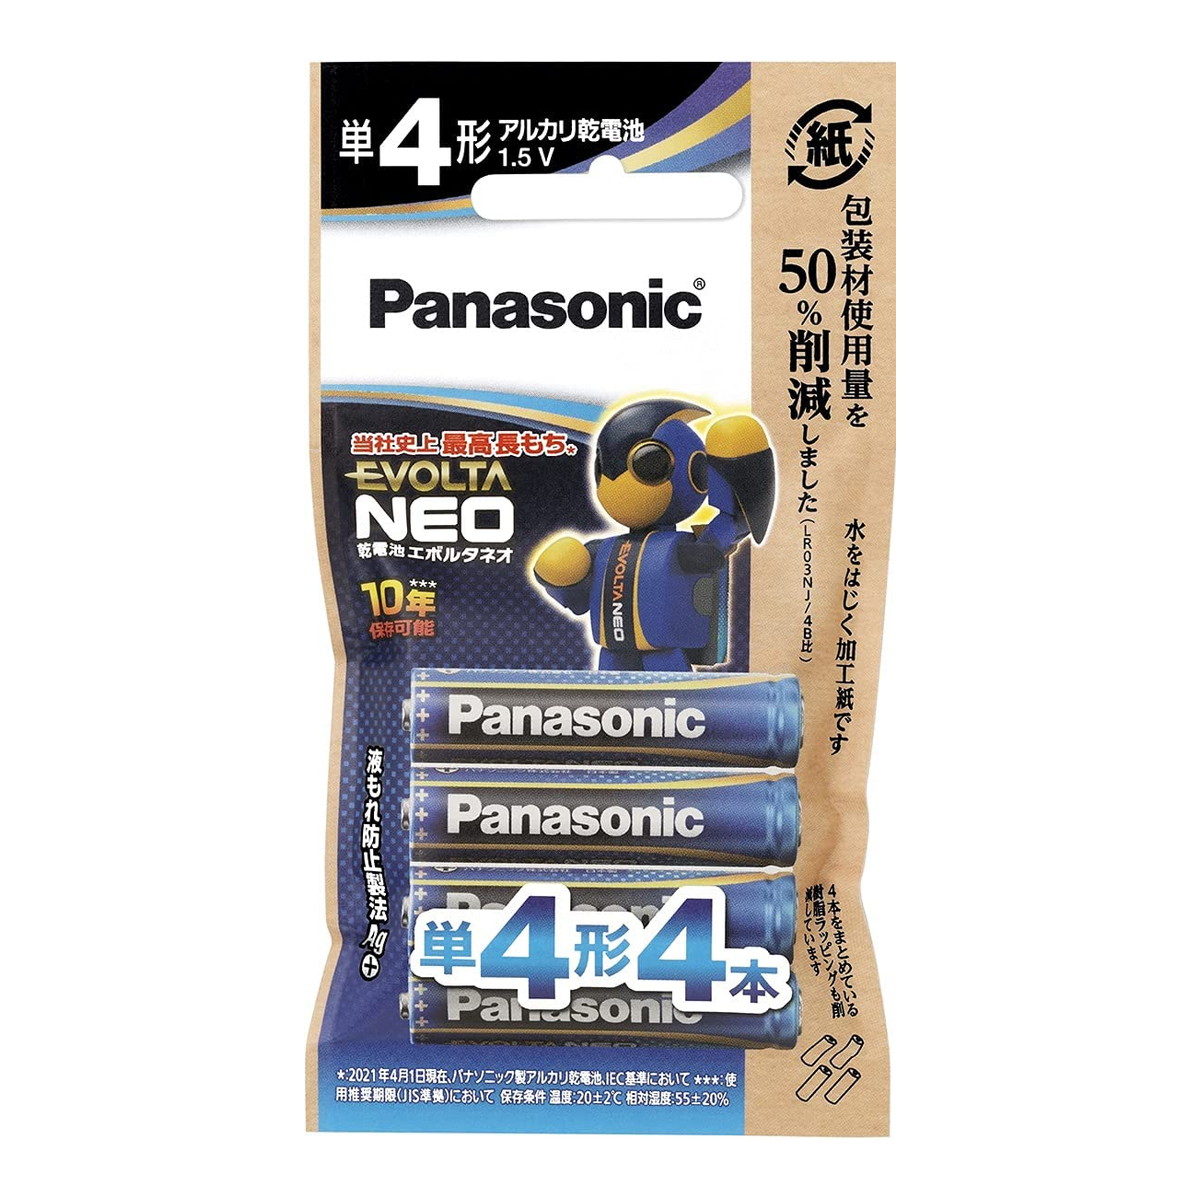 Panasonic アルカリ乾電池 エボルタNEO LR03NJ 4H 紙袋パッケージ 単4形 4本入